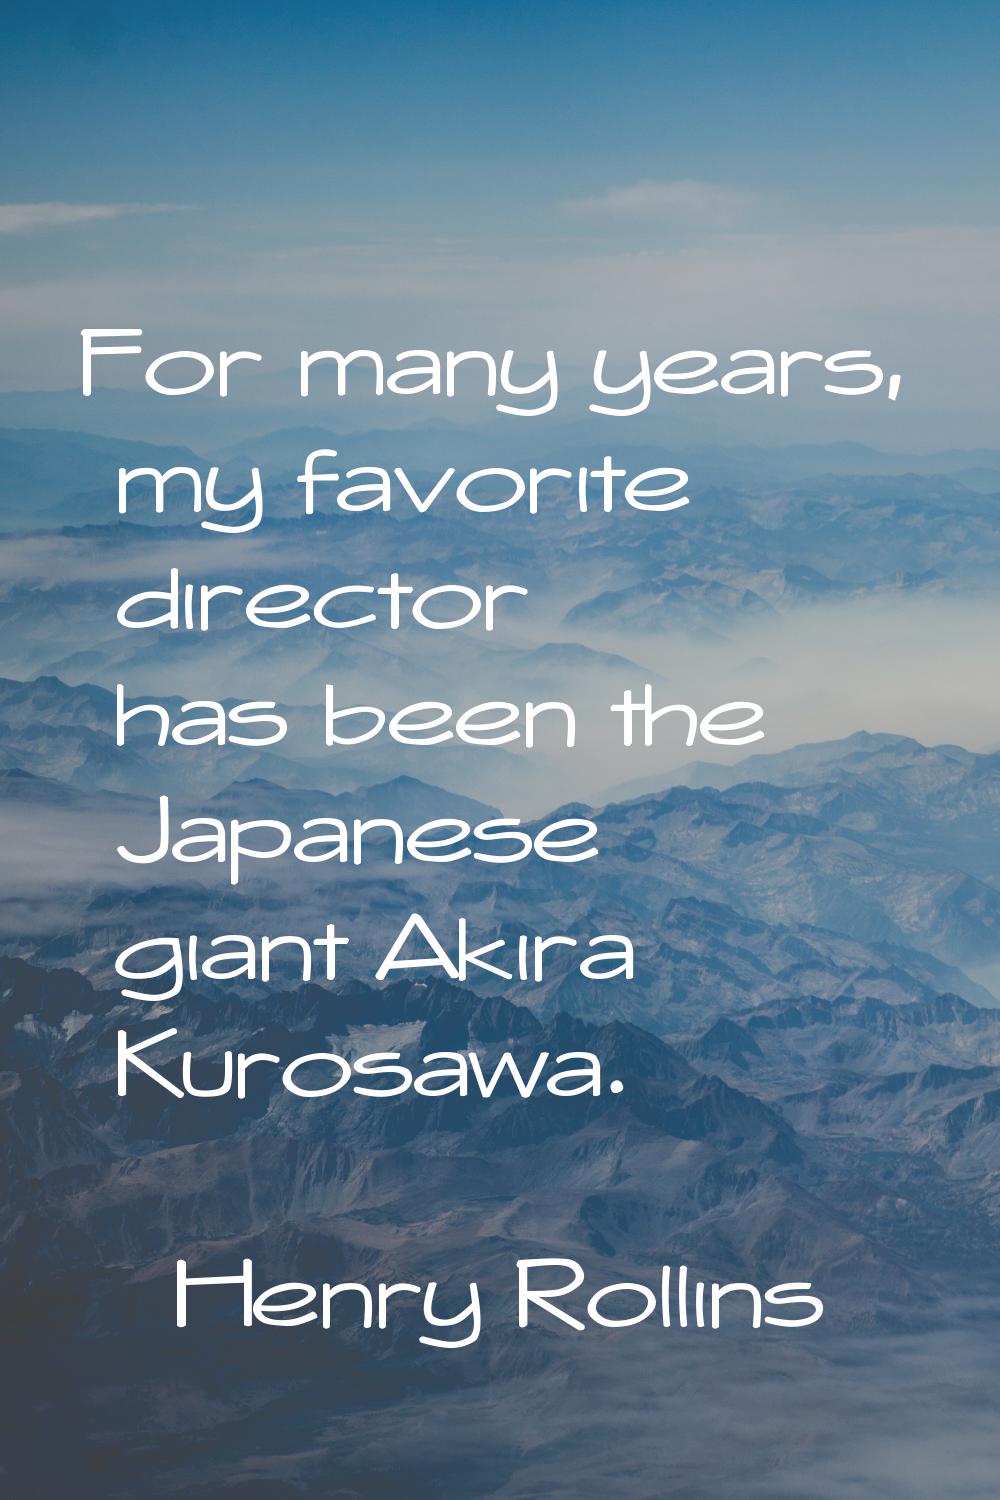 For many years, my favorite director has been the Japanese giant Akira Kurosawa.